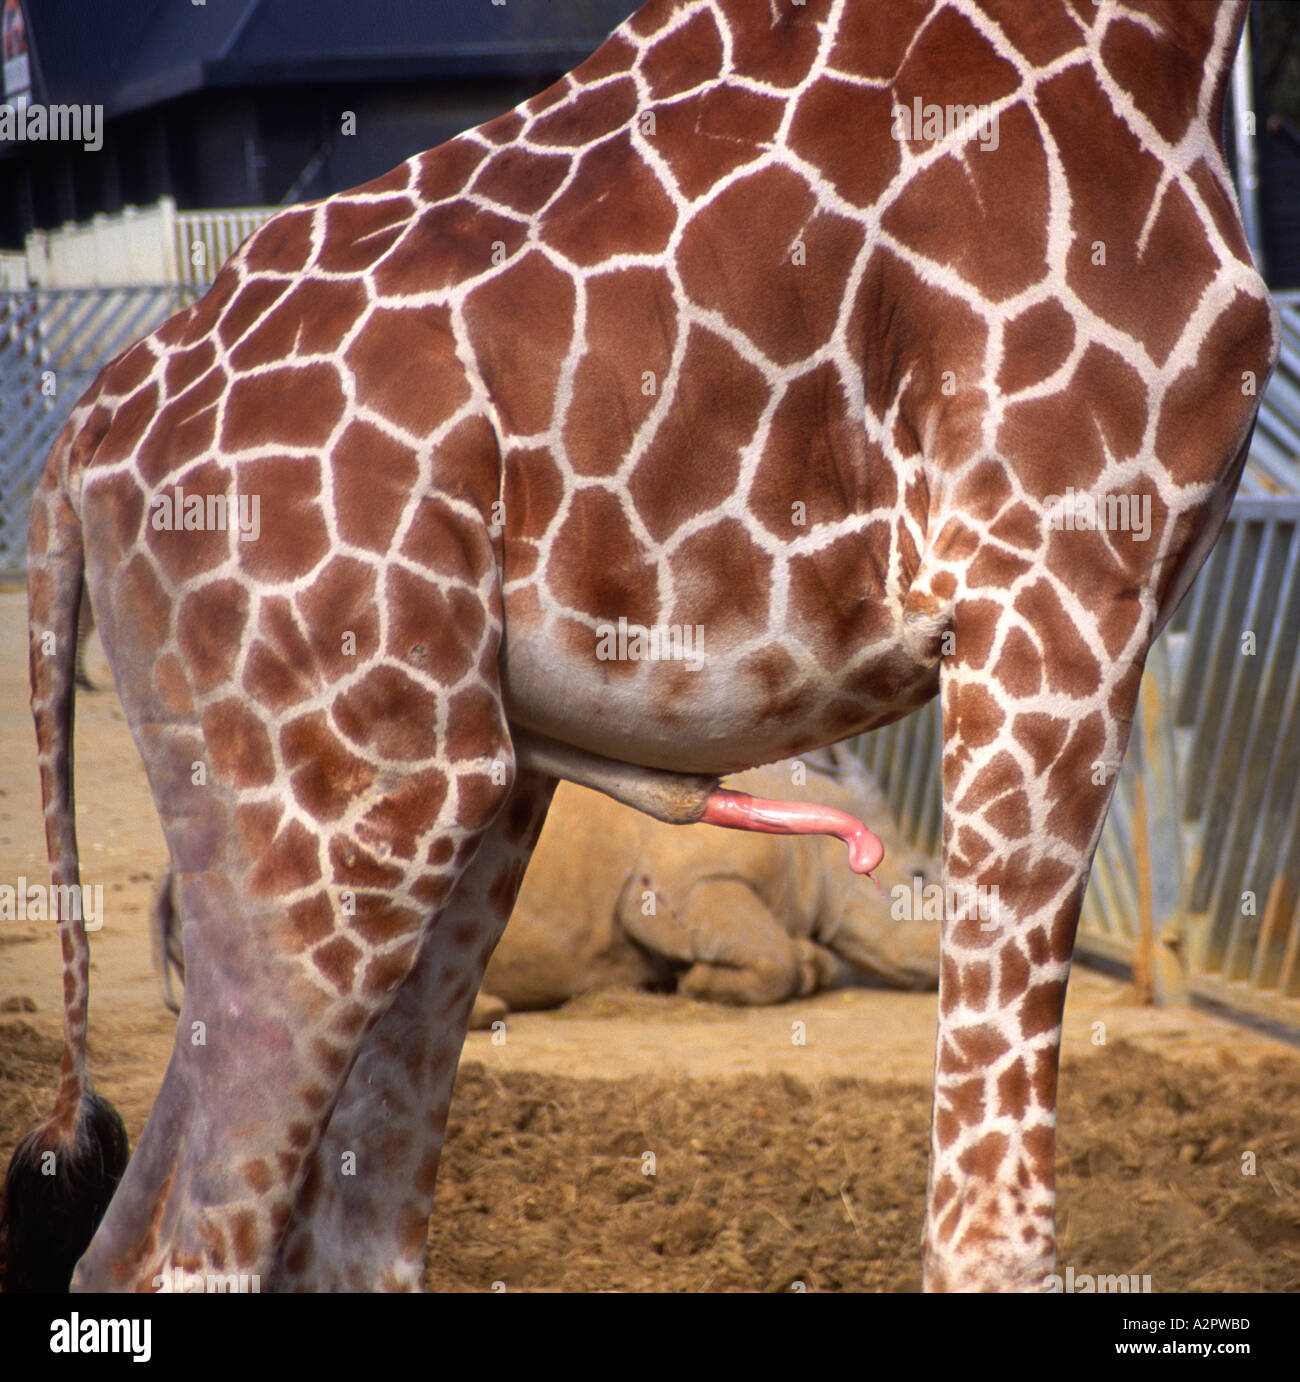 Male giraffe body shot with erect penis Stock Photo - Alamy